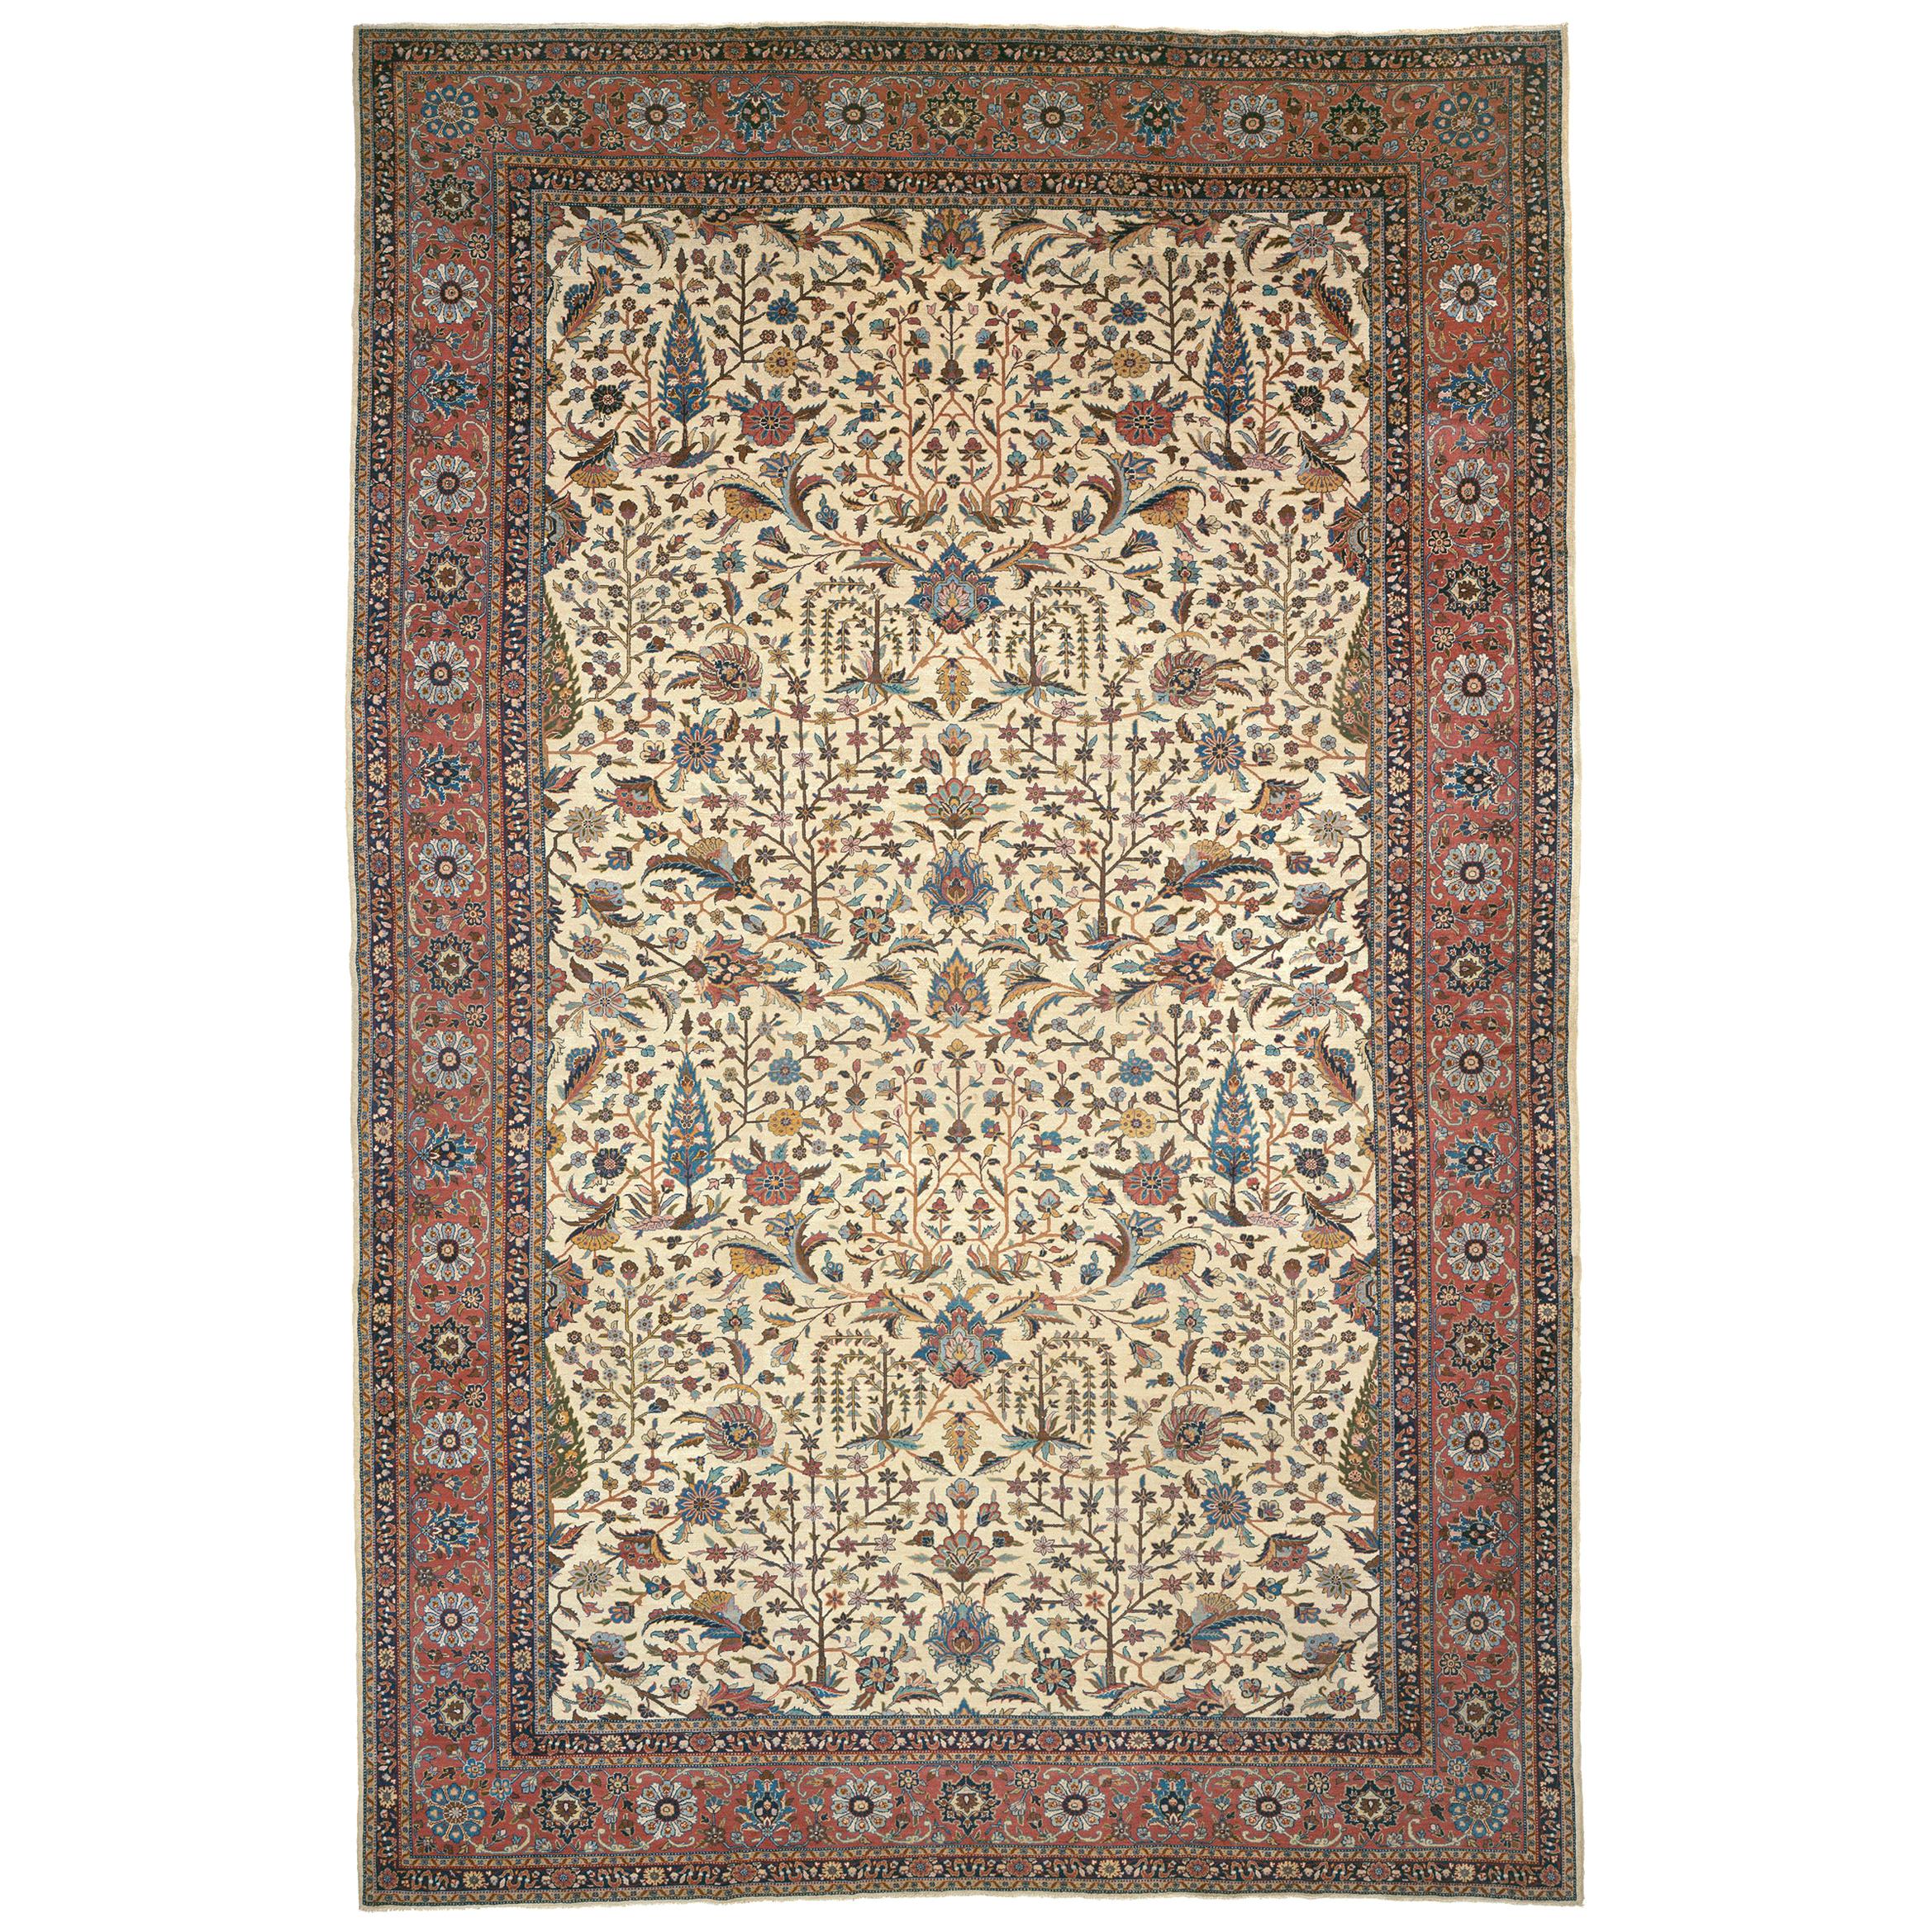 Early 20th Century Persian Tabriz Rug